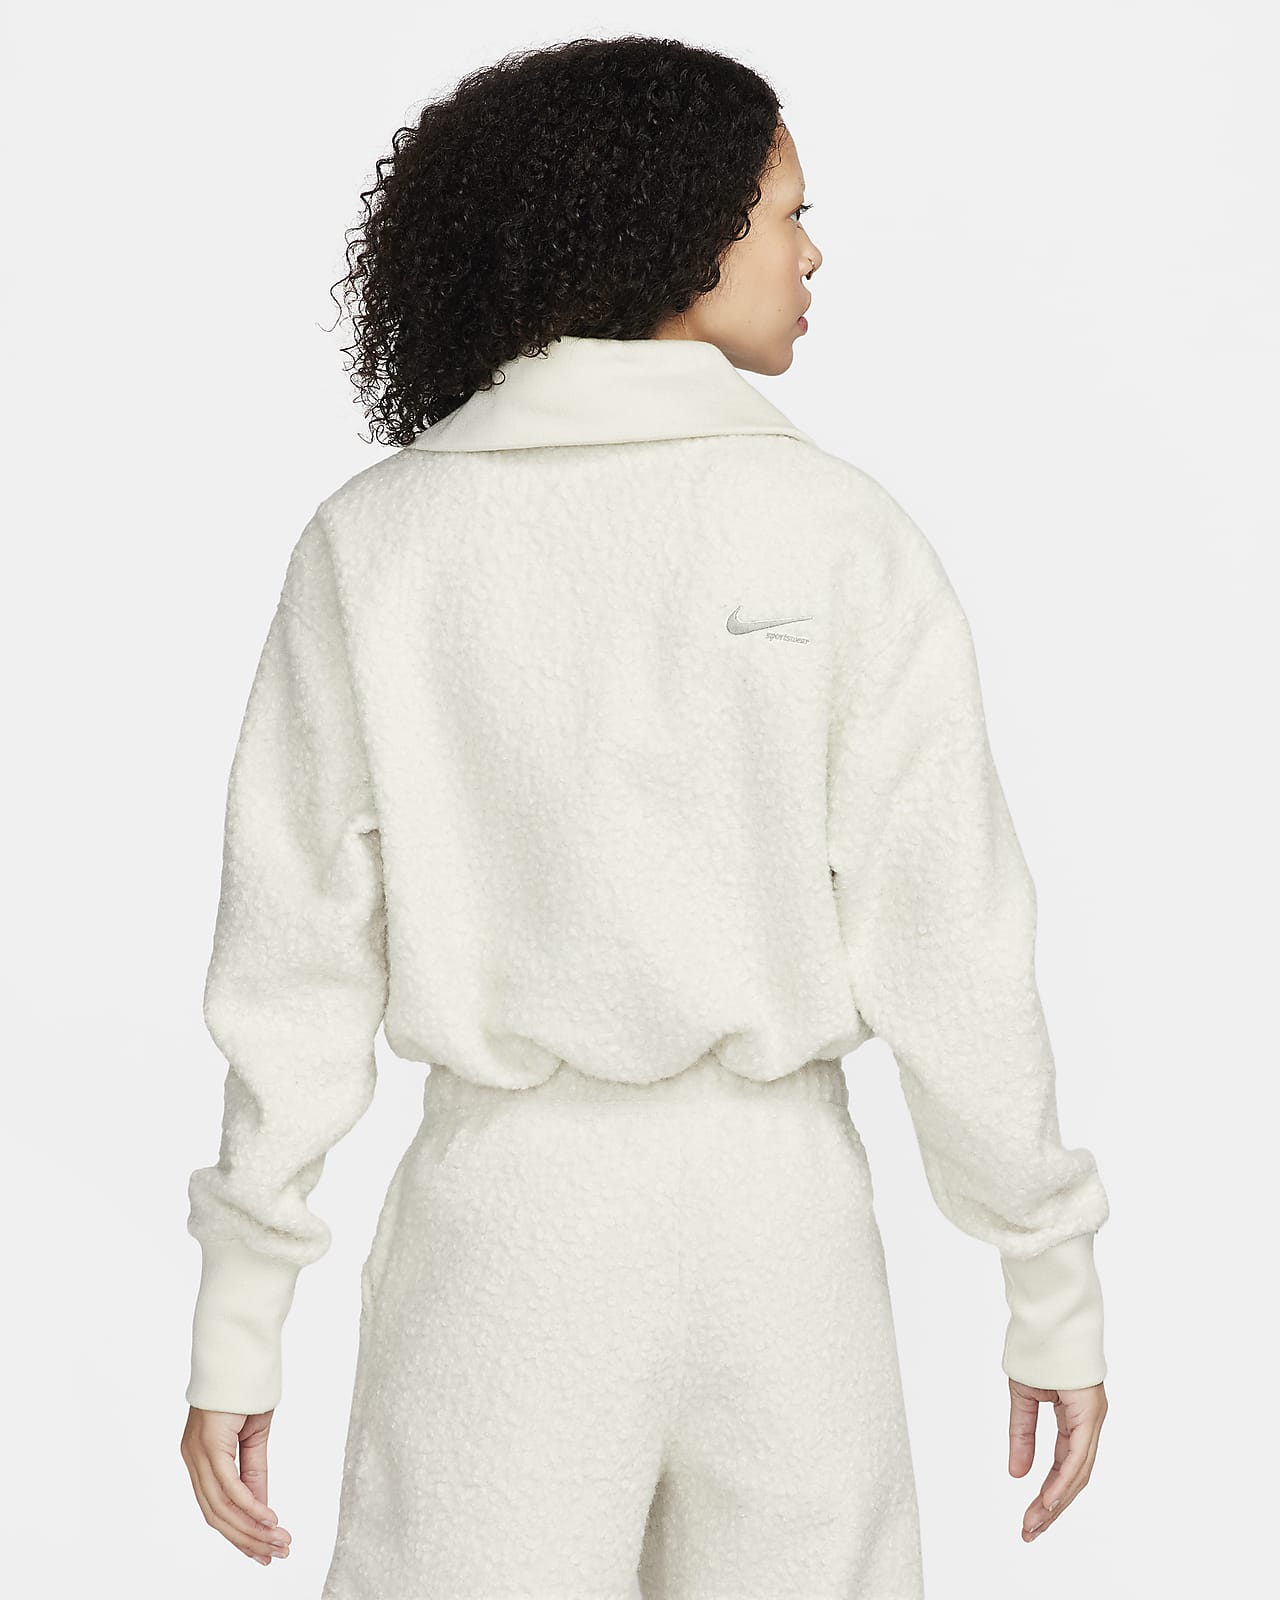 Nike Sportswear Collection Women's High-Pile Fleece 1/2-Zip Top.